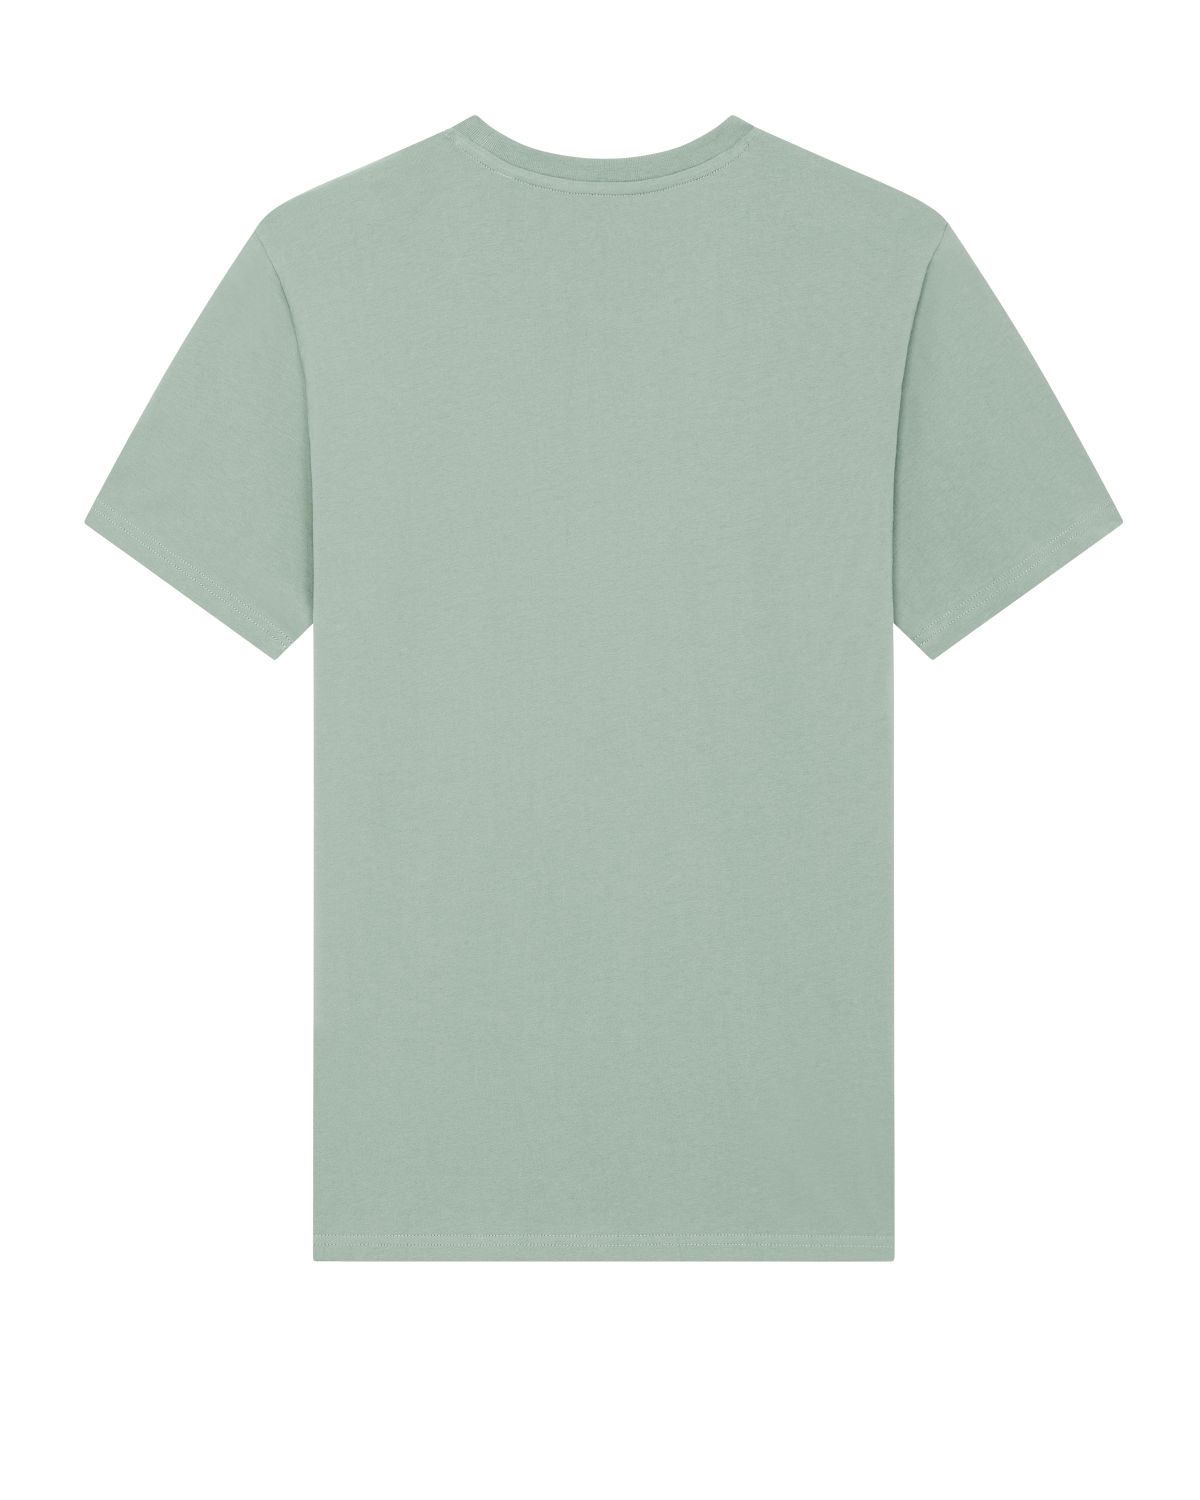 Camiseta unisex personalizada | 100% algodón orgánico